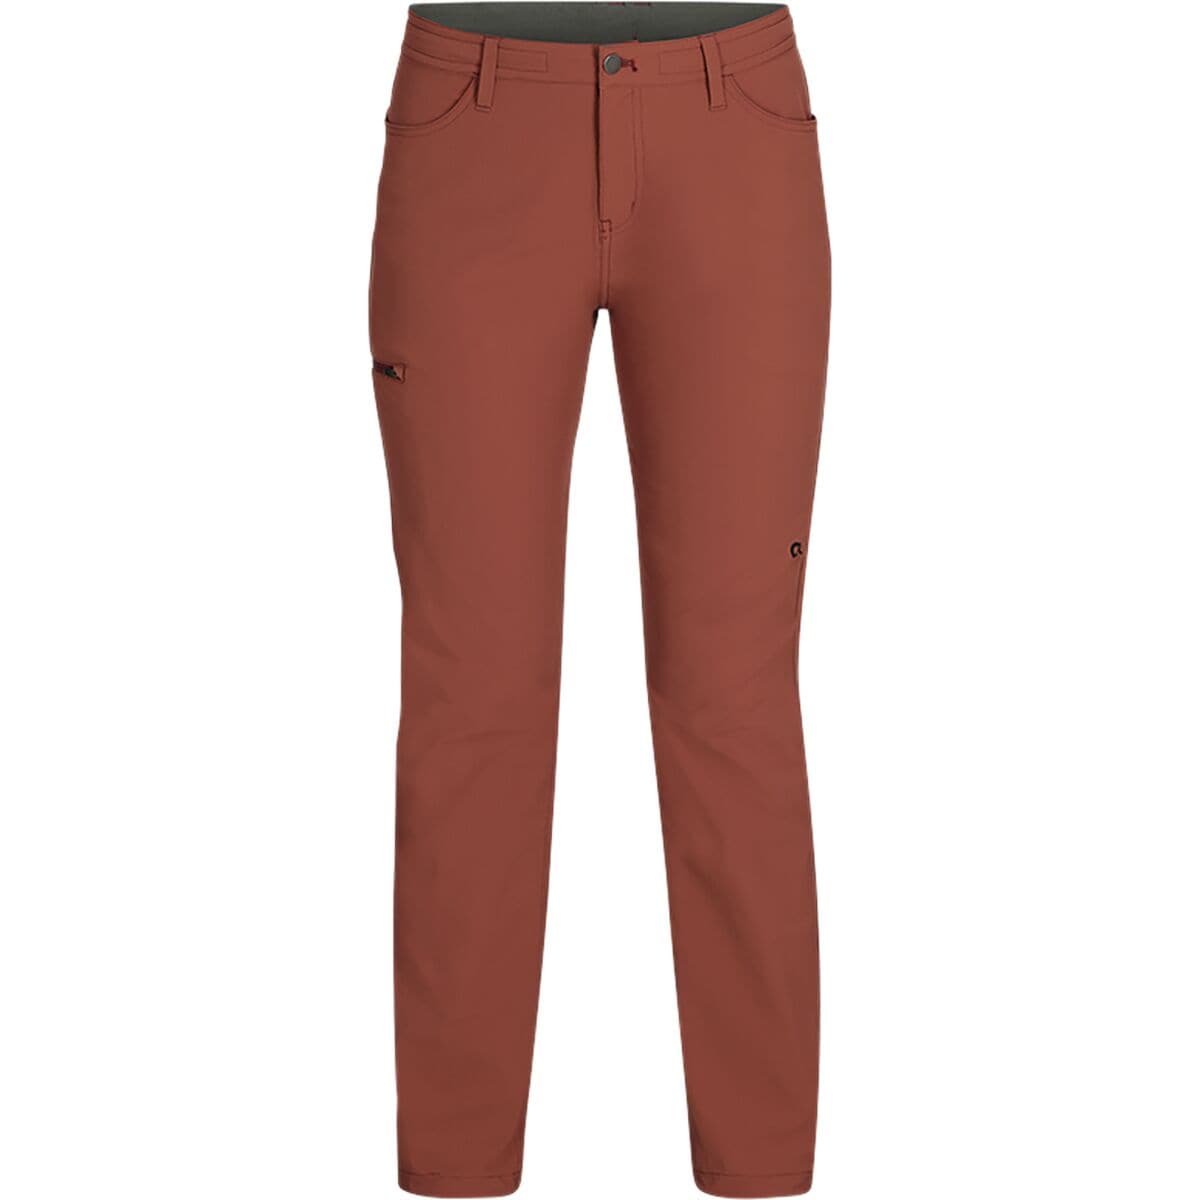 Outdoor Research Women's Ferrosi Pants - Short Inseam - Climbing &  Multi-Sport Pant Black at  Women's Clothing store